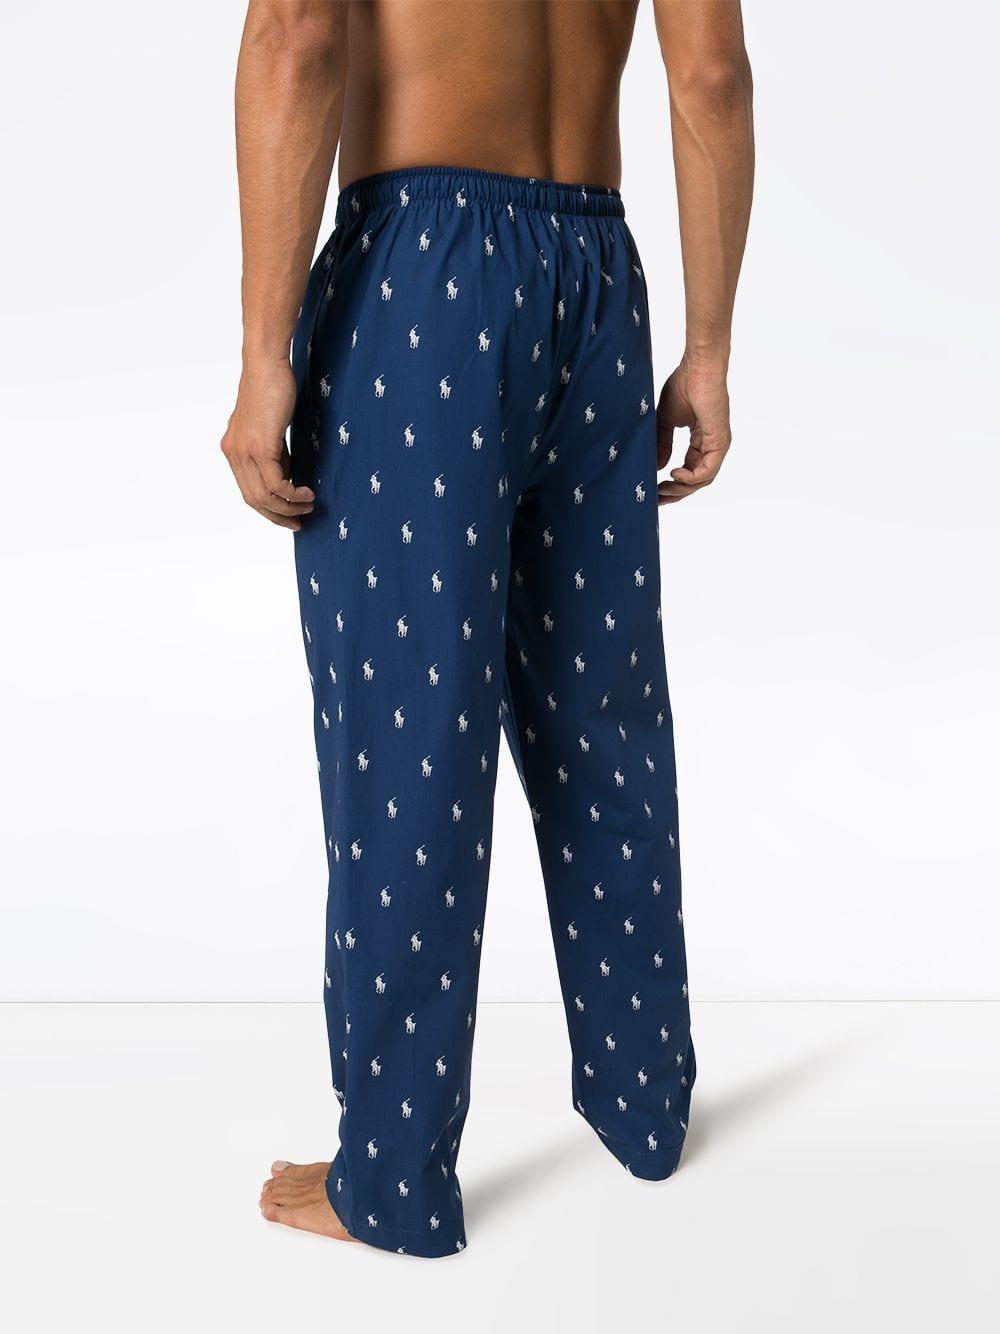 pyjama ralph lauren homme - 57% OFF - Free delivery - chantilly.bemkt.com.mx